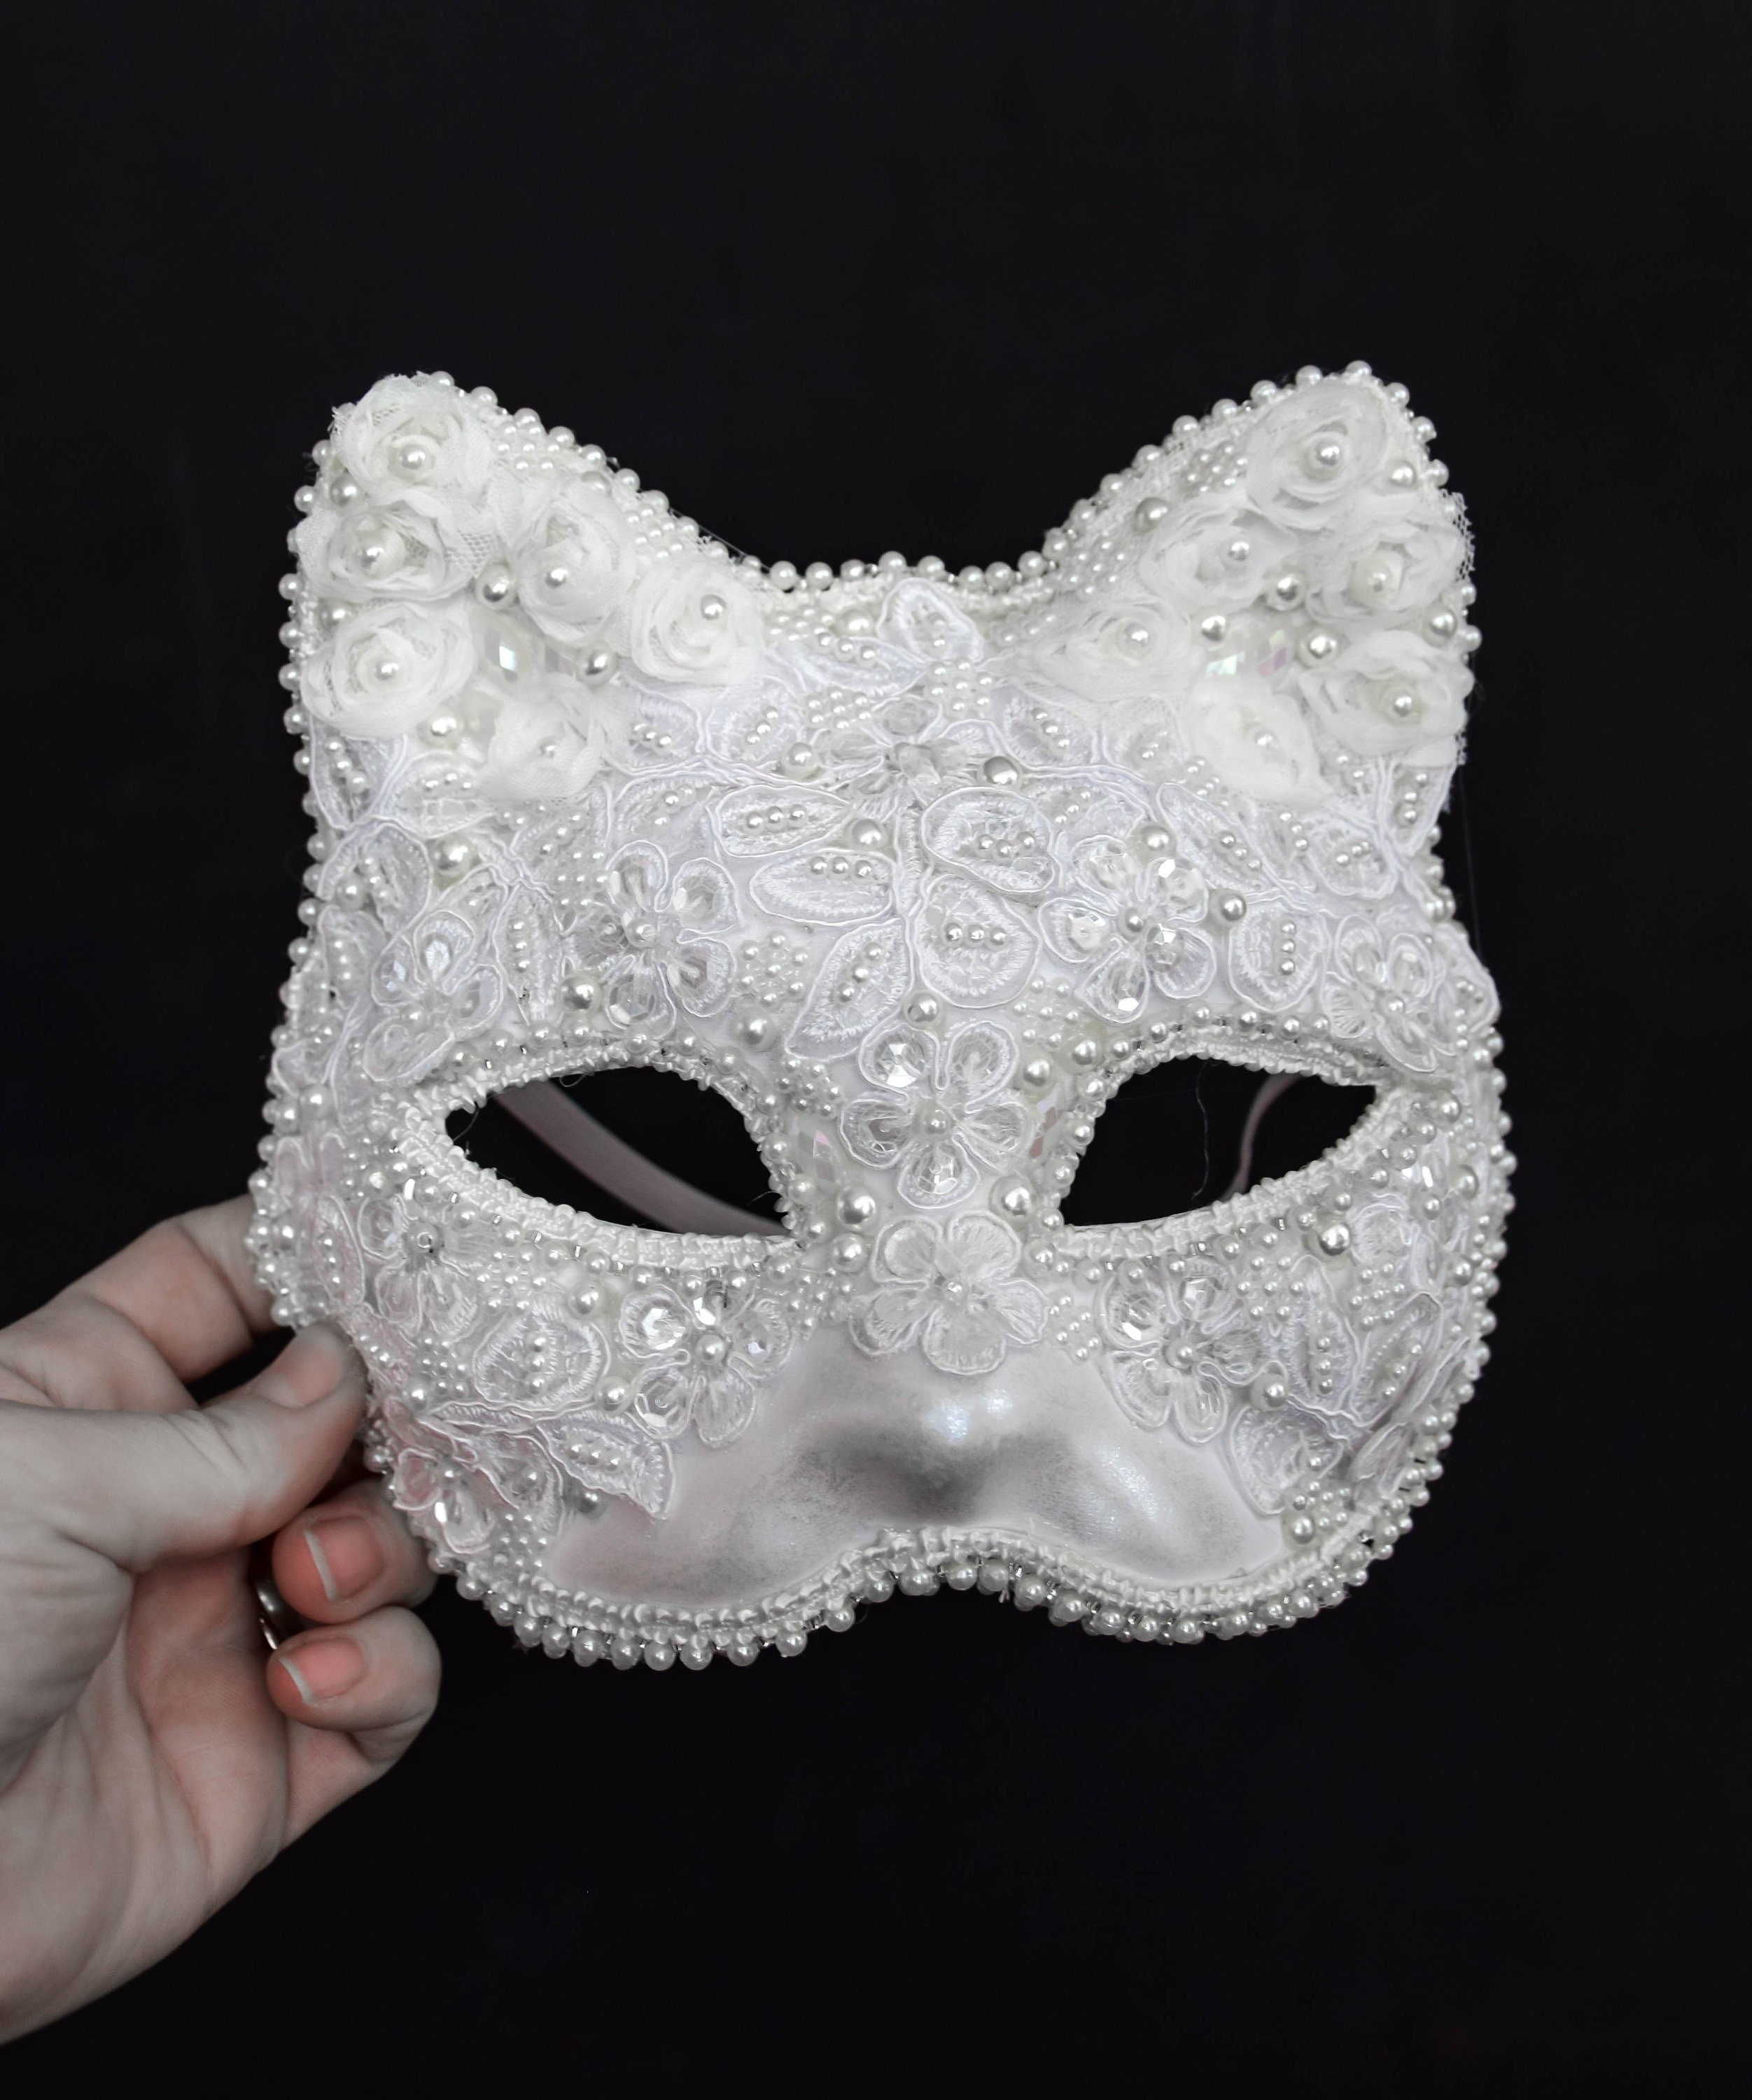 Handmade Mask Persian Cat Mask White Cat Mask Hand Cut Rubber Latex Mask 